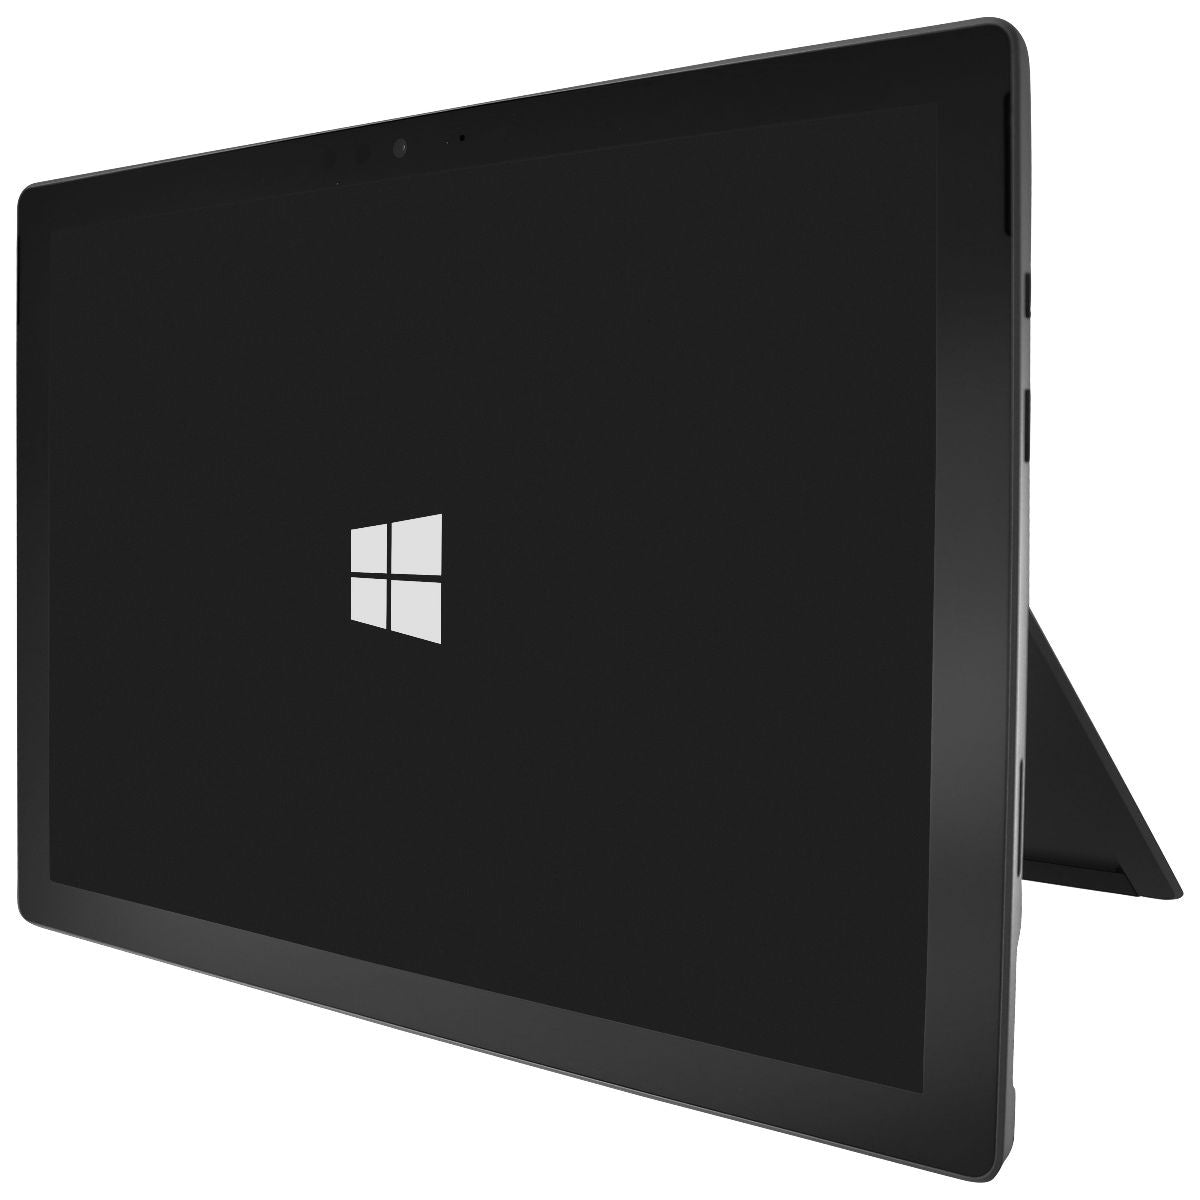 Microsoft Surface Pro LTE (Intel Core i5, 8GB RAM 256GB) Tablet PC - Silver  1807